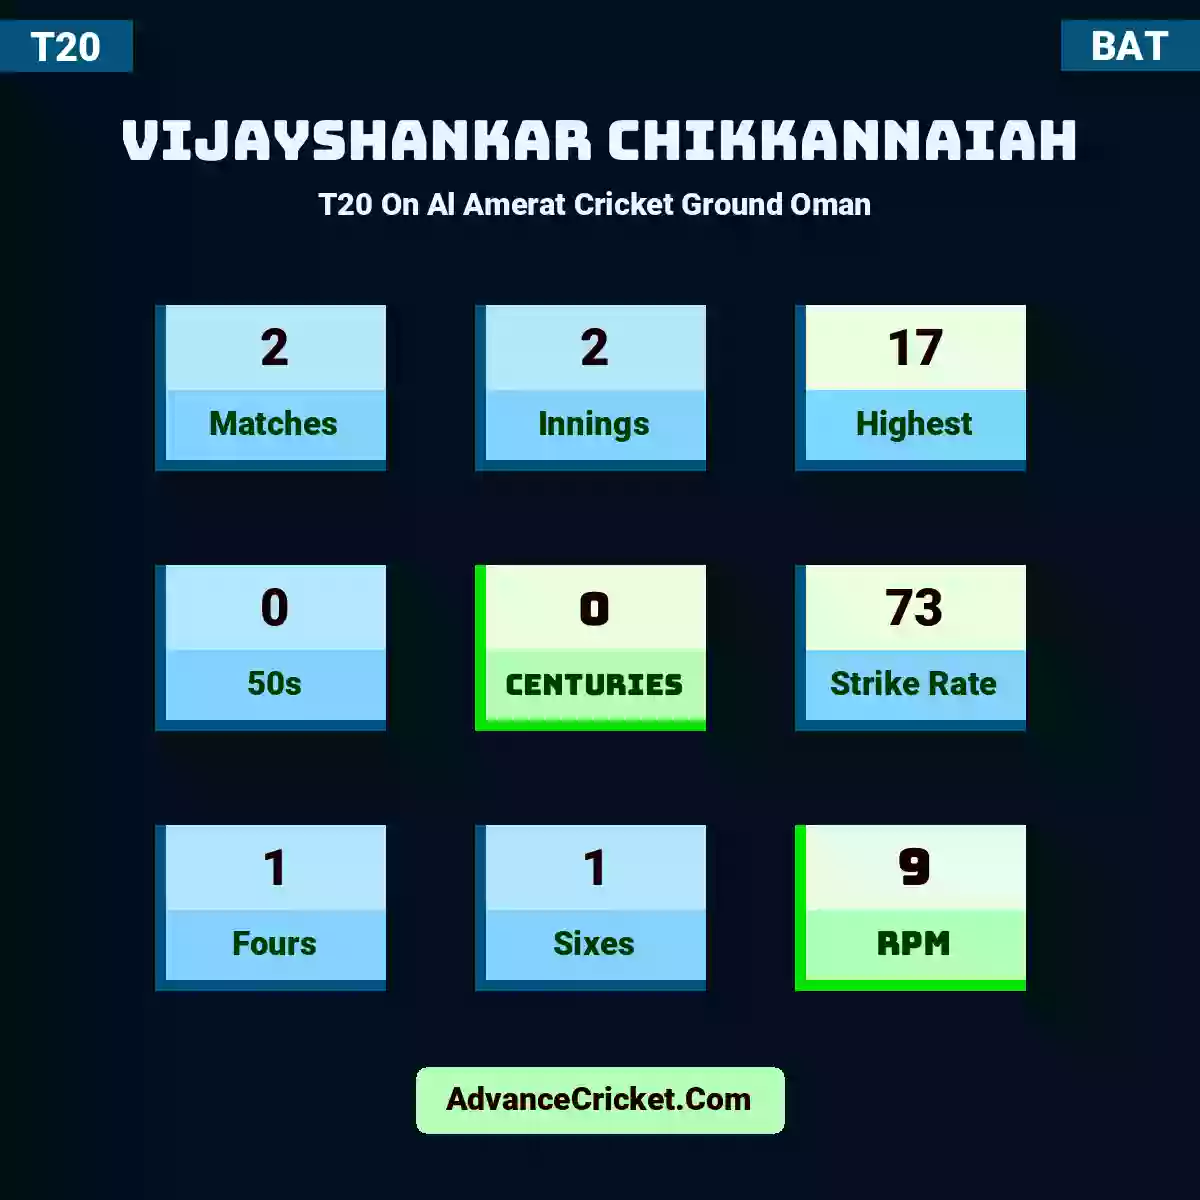 Vijayshankar Chikkannaiah T20  On Al Amerat Cricket Ground Oman , Vijayshankar Chikkannaiah played 2 matches, scored 17 runs as highest, 0 half-centuries, and 0 centuries, with a strike rate of 73. V.Chikkannaiah hit 1 fours and 1 sixes, with an RPM of 9.